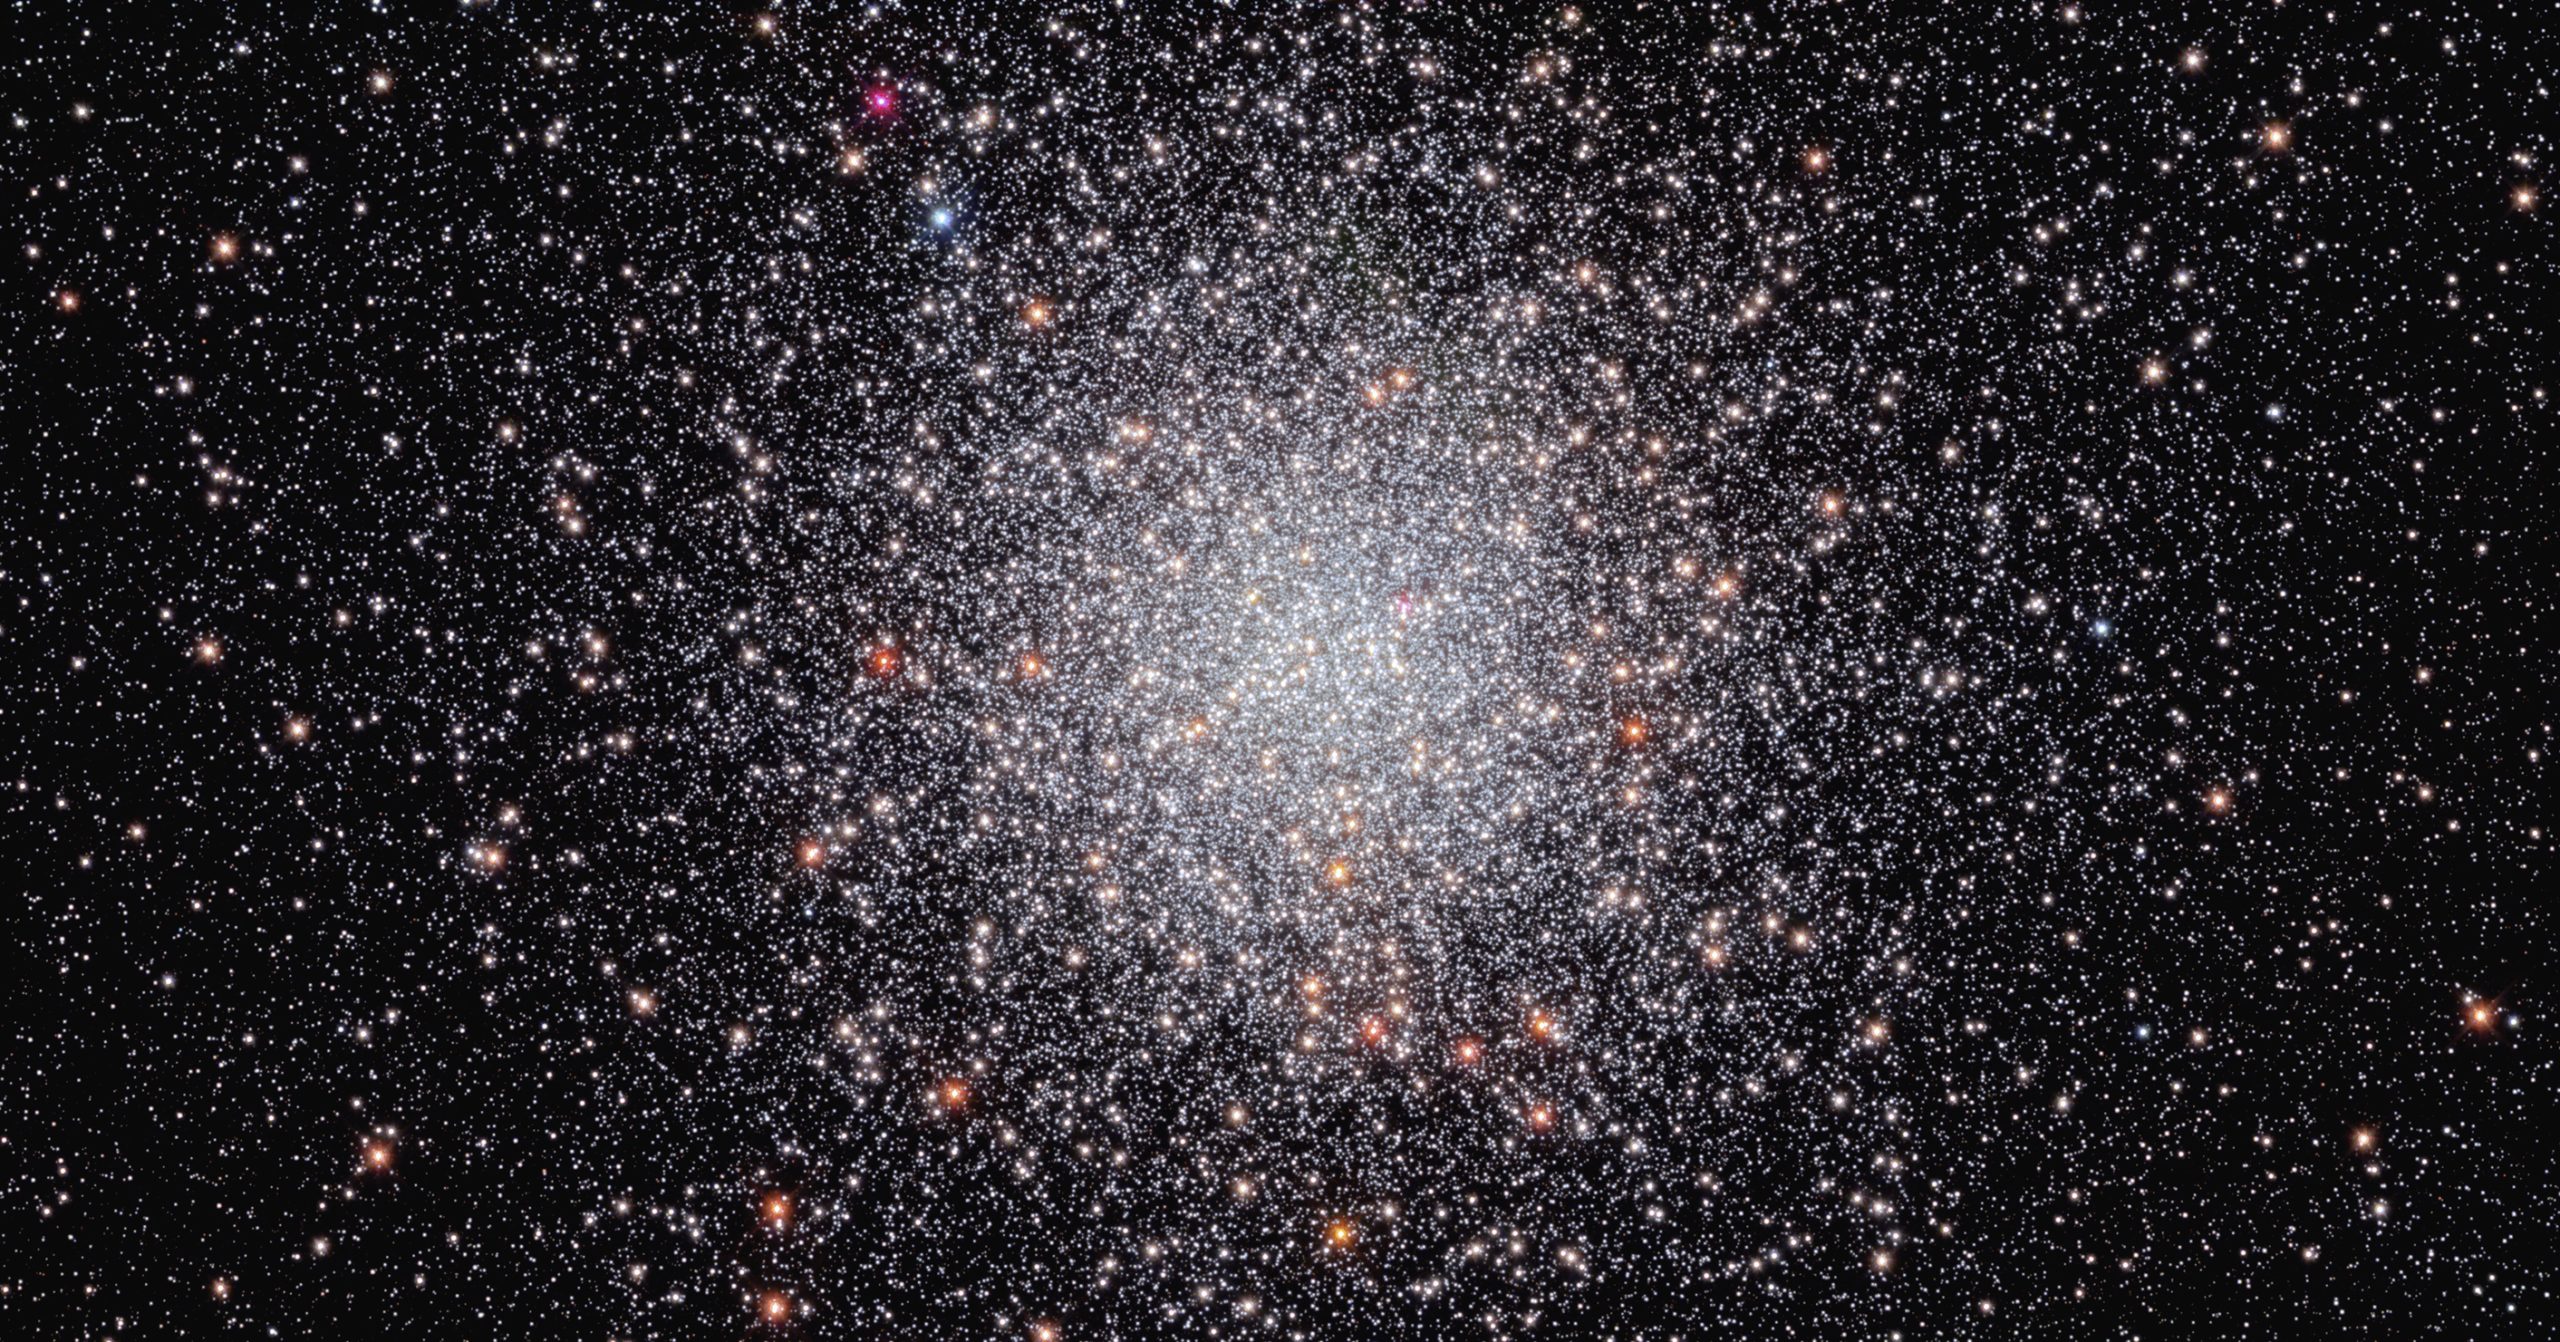 A view of NGC 6440 by Hubble. Image credit: NASA, ESA, C. Pallanca and F. Ferraro (Universits Di Bologna), and M. van Kerkwijk (University of Toronto); Processing: G. Kober (NASA/Catholic University of America).